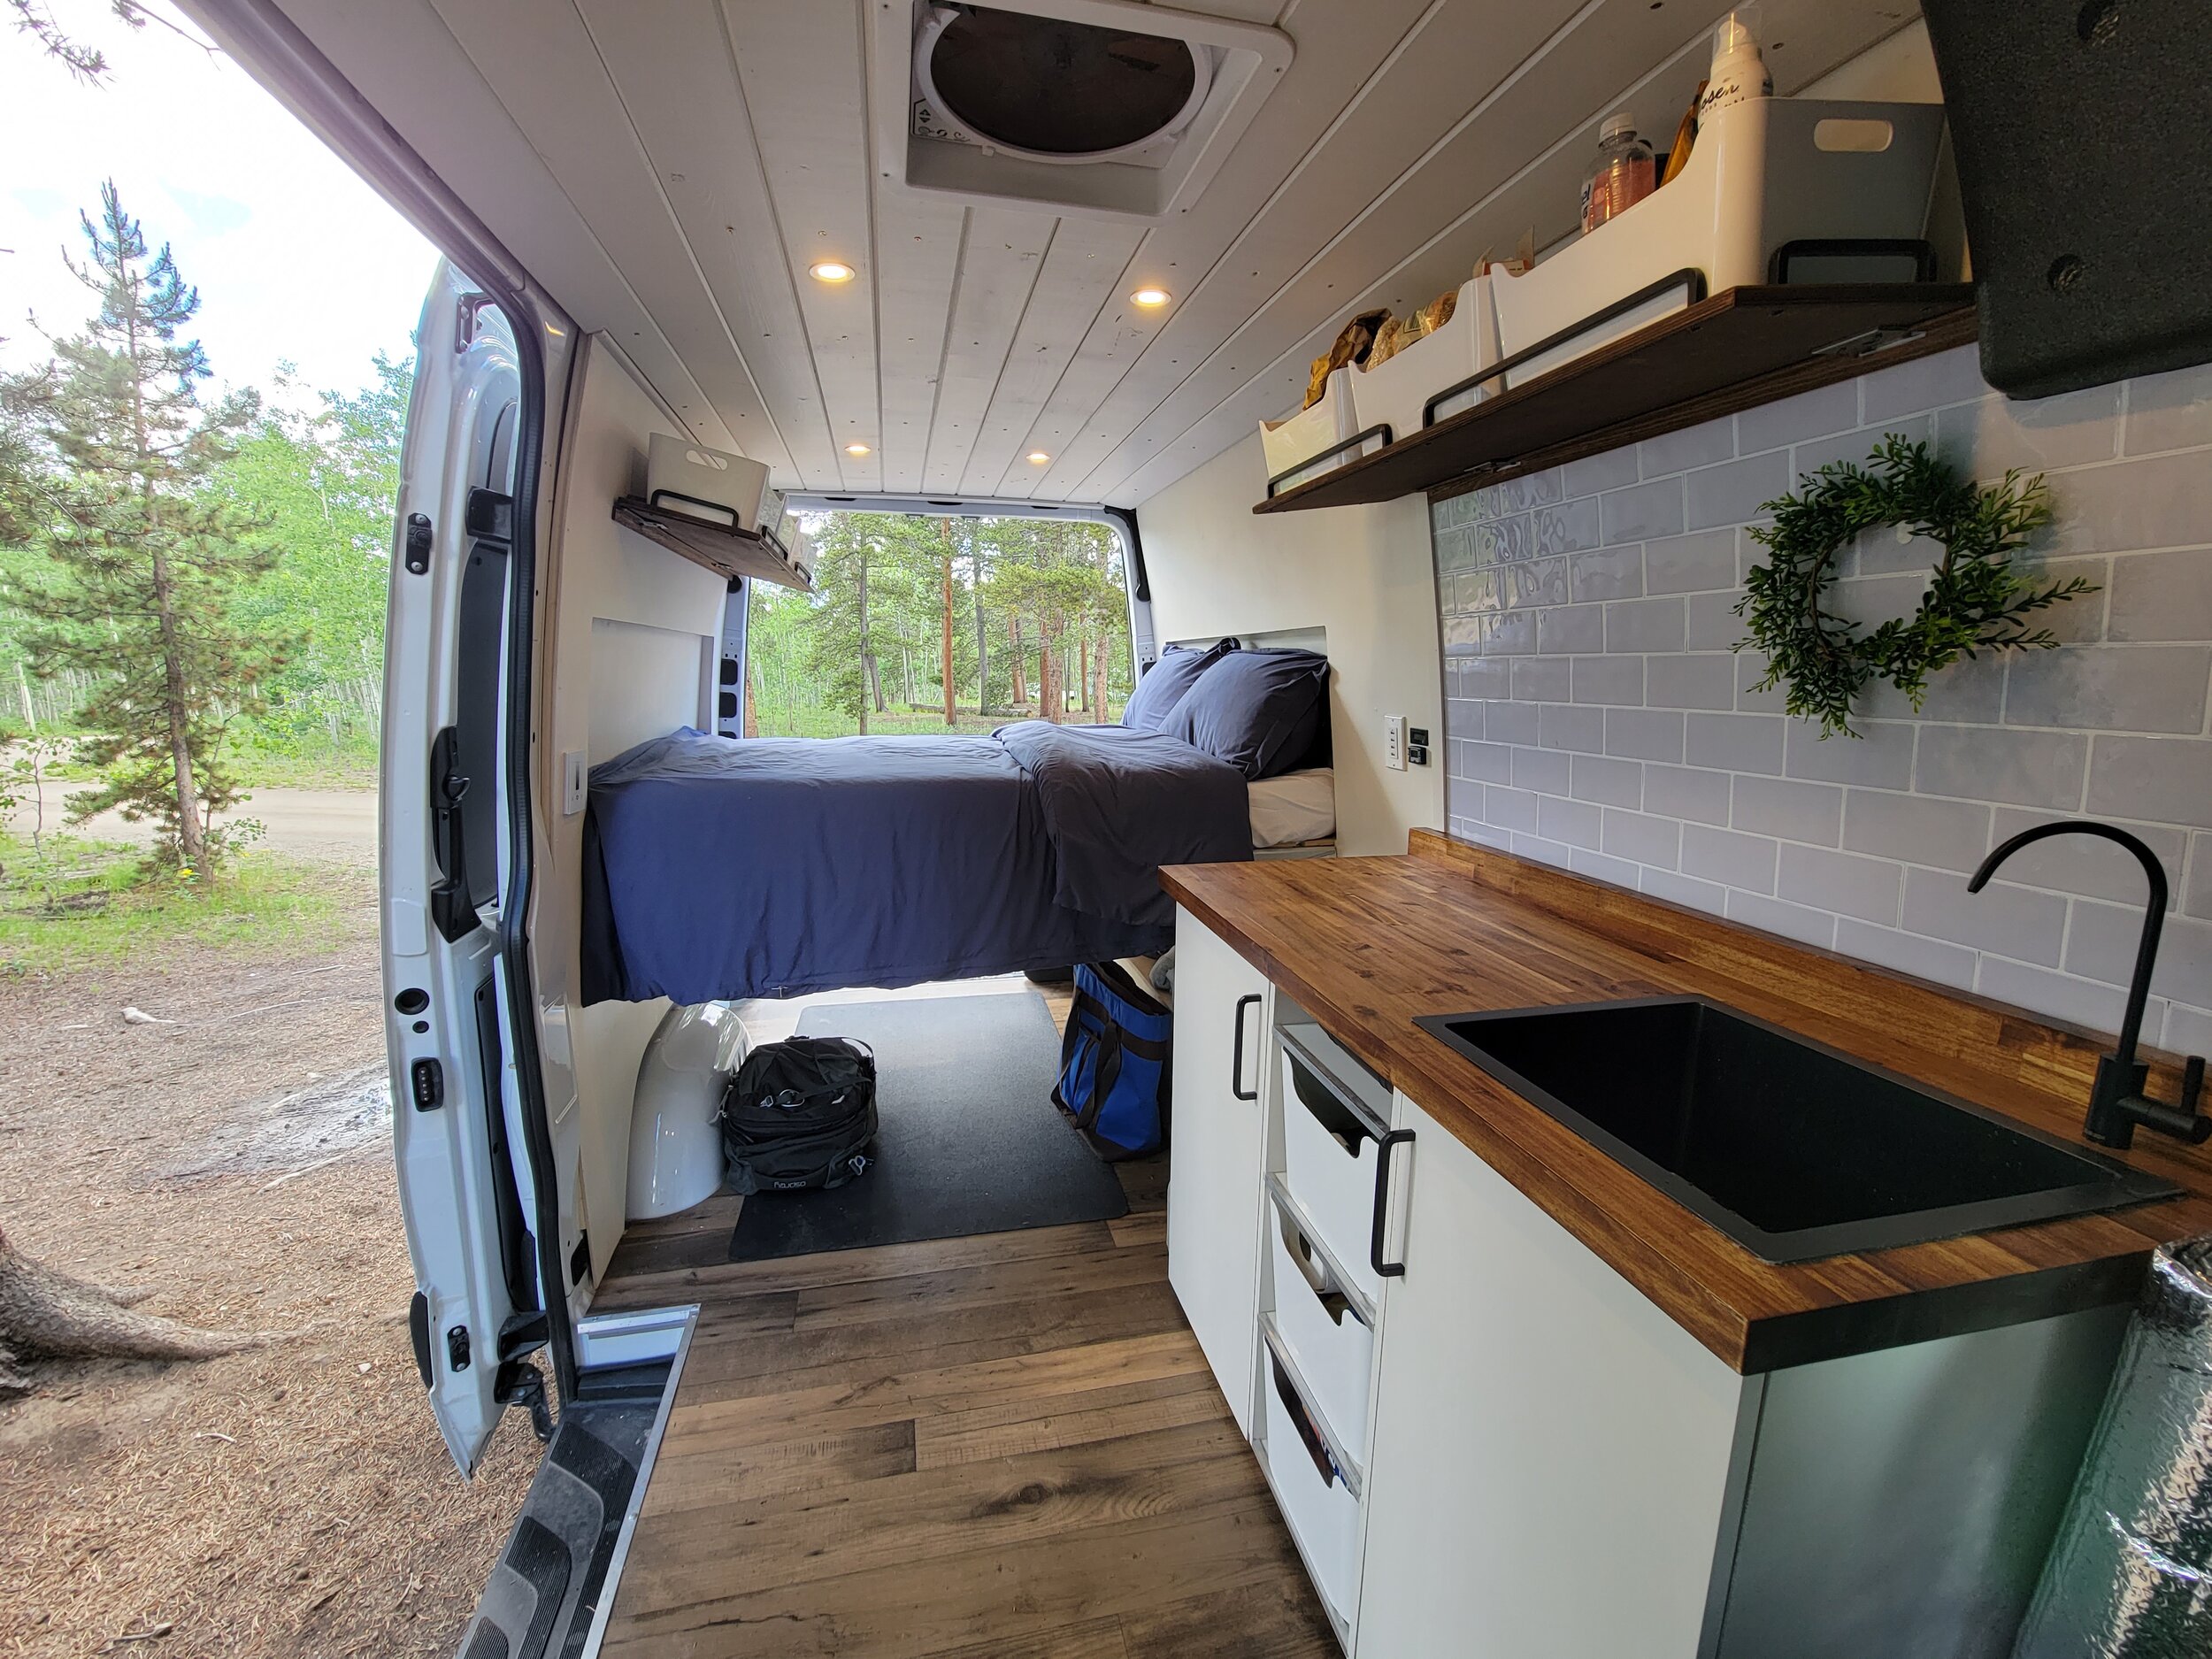 Discover Campervans - Campervan Rentals, Custom Conversions and Builds